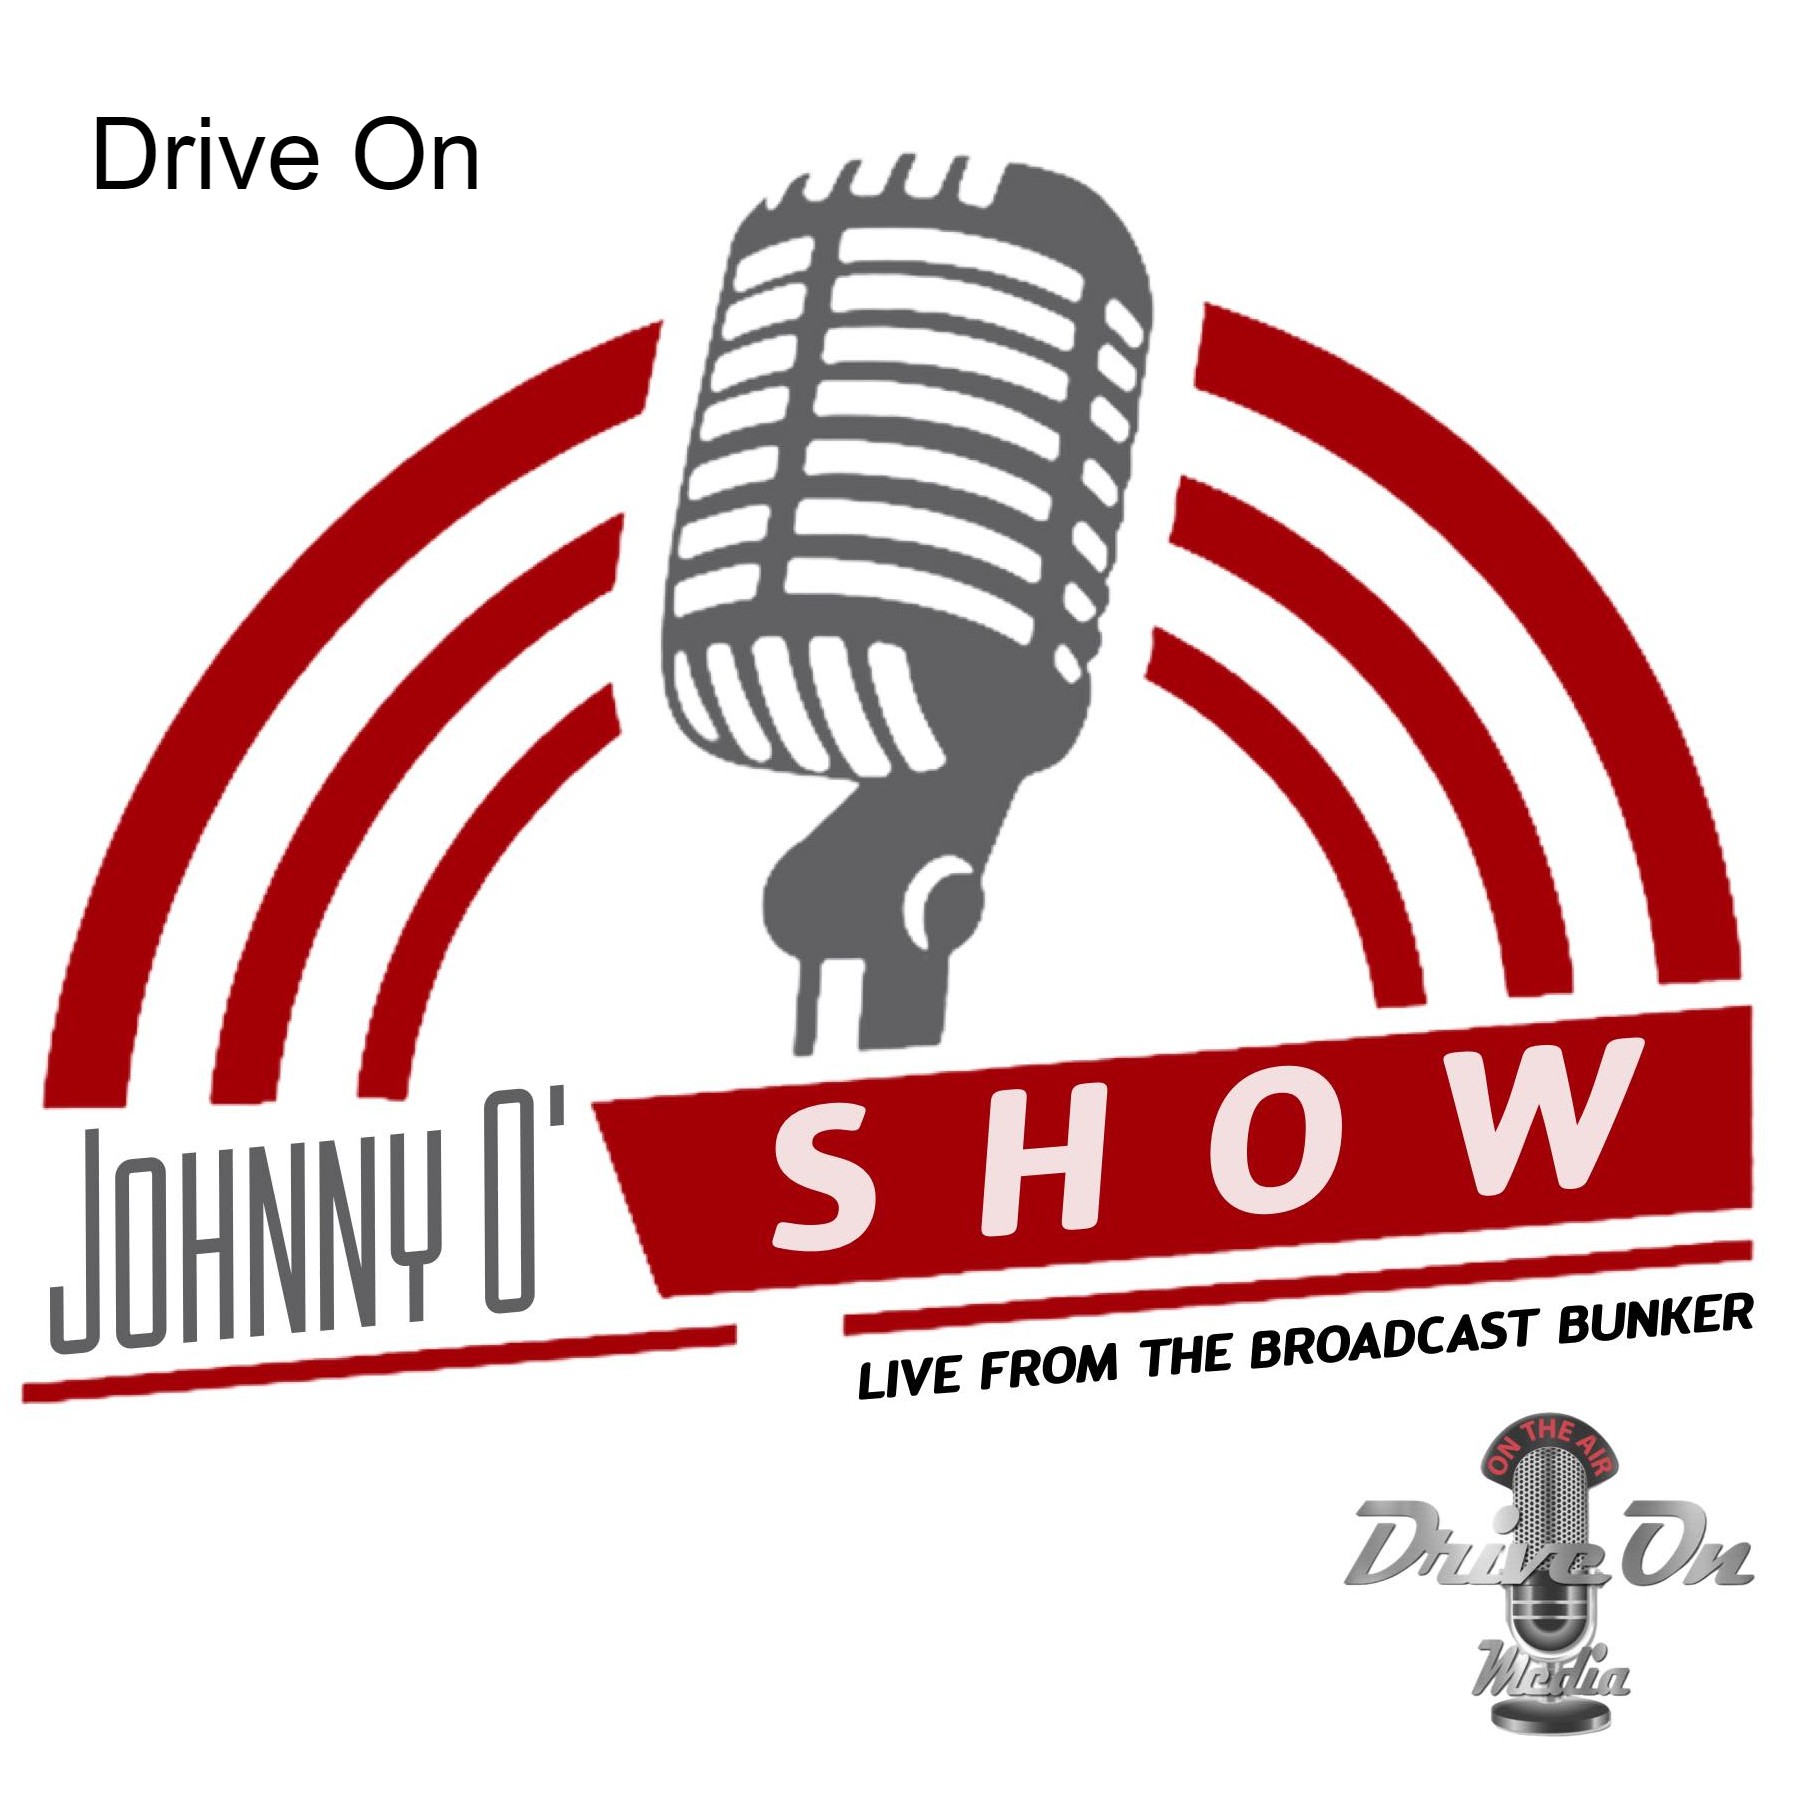 Johnny O Show - Drive On Media